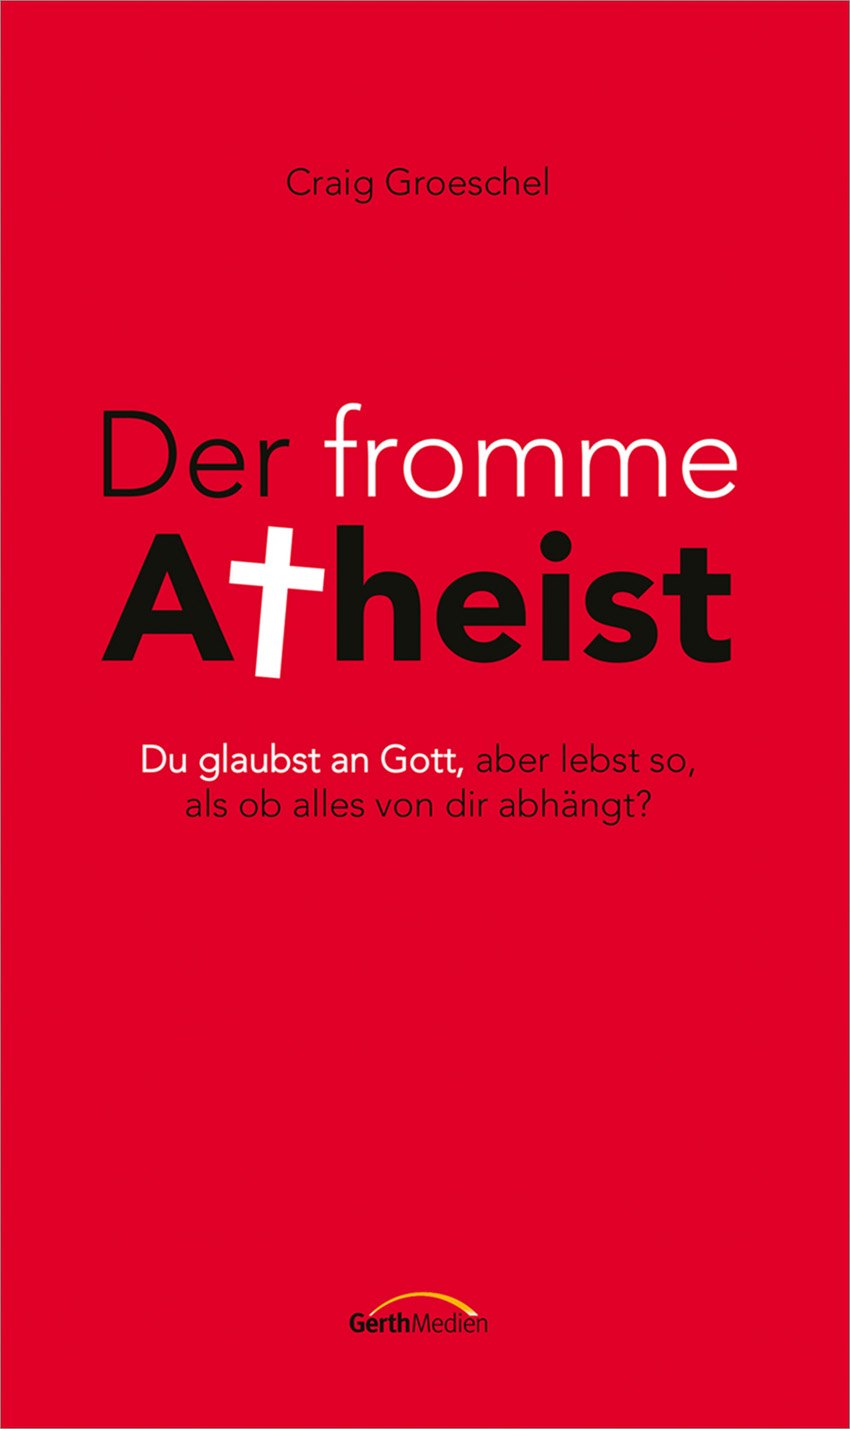 Der fromme Atheist - Du glaubst an Gott, aber lebst so, als ob alles von dir abhängt?